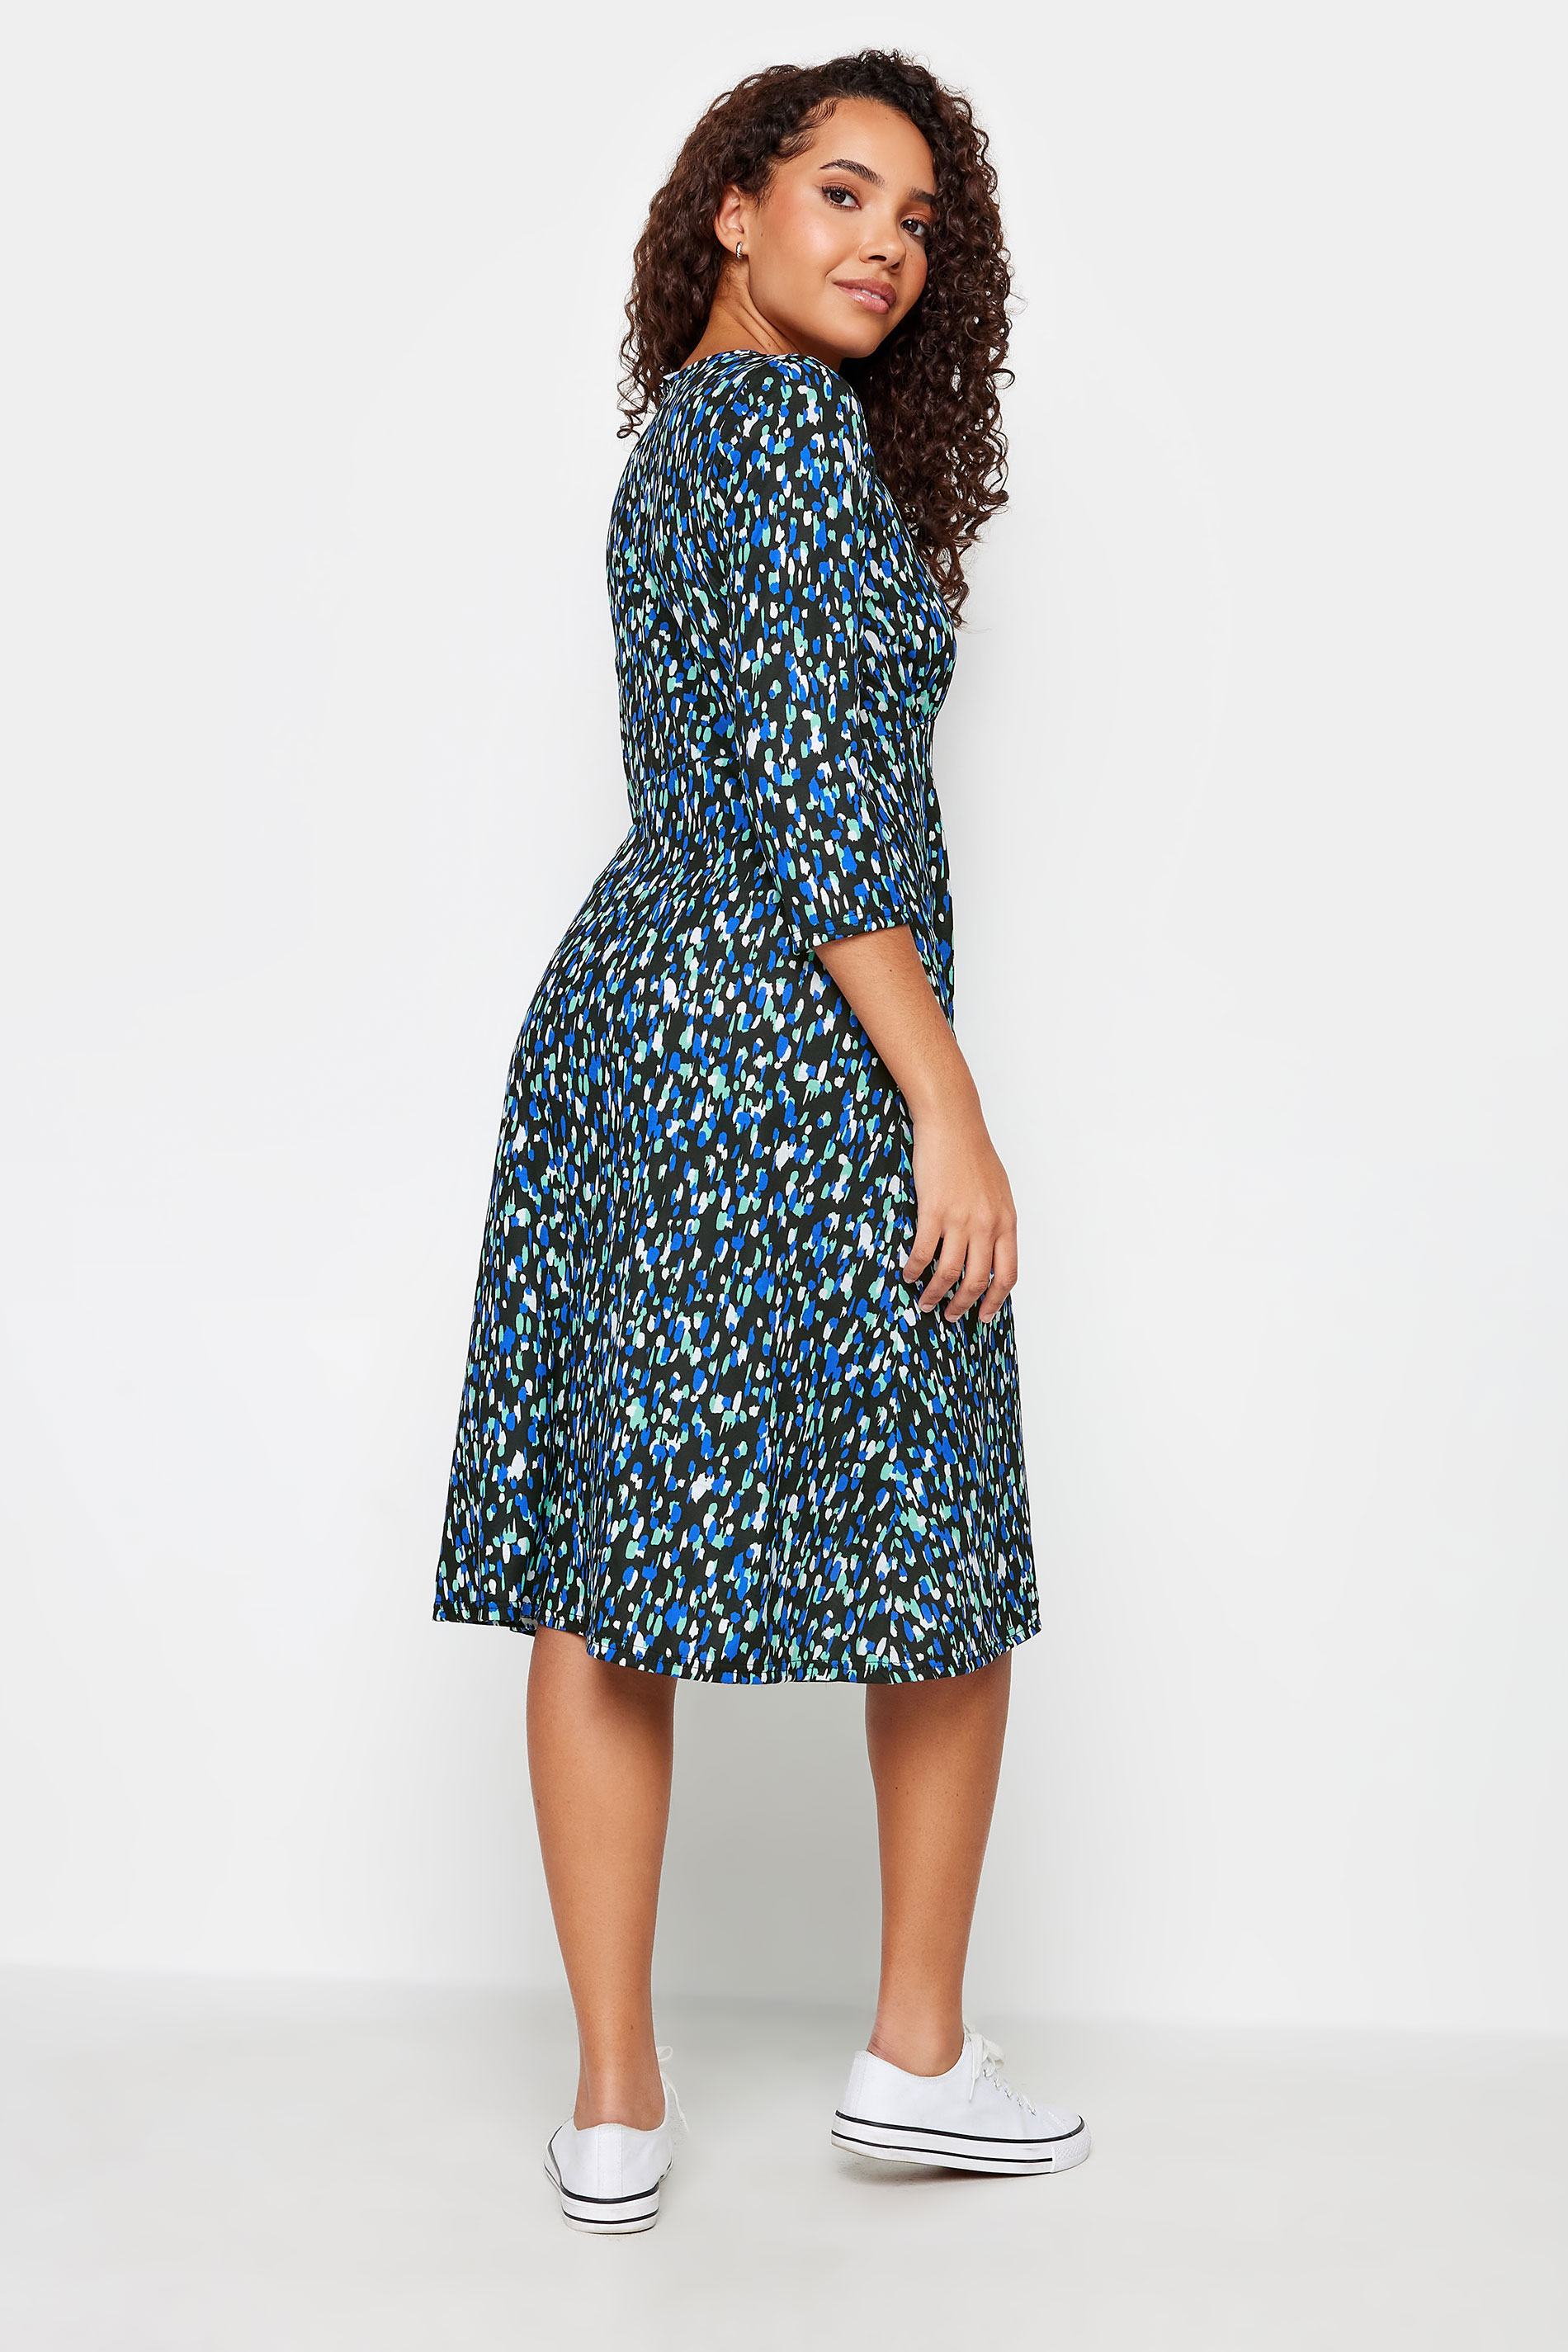 M&Co Black & Blue Markings Midaxi Dress | M&Co 3